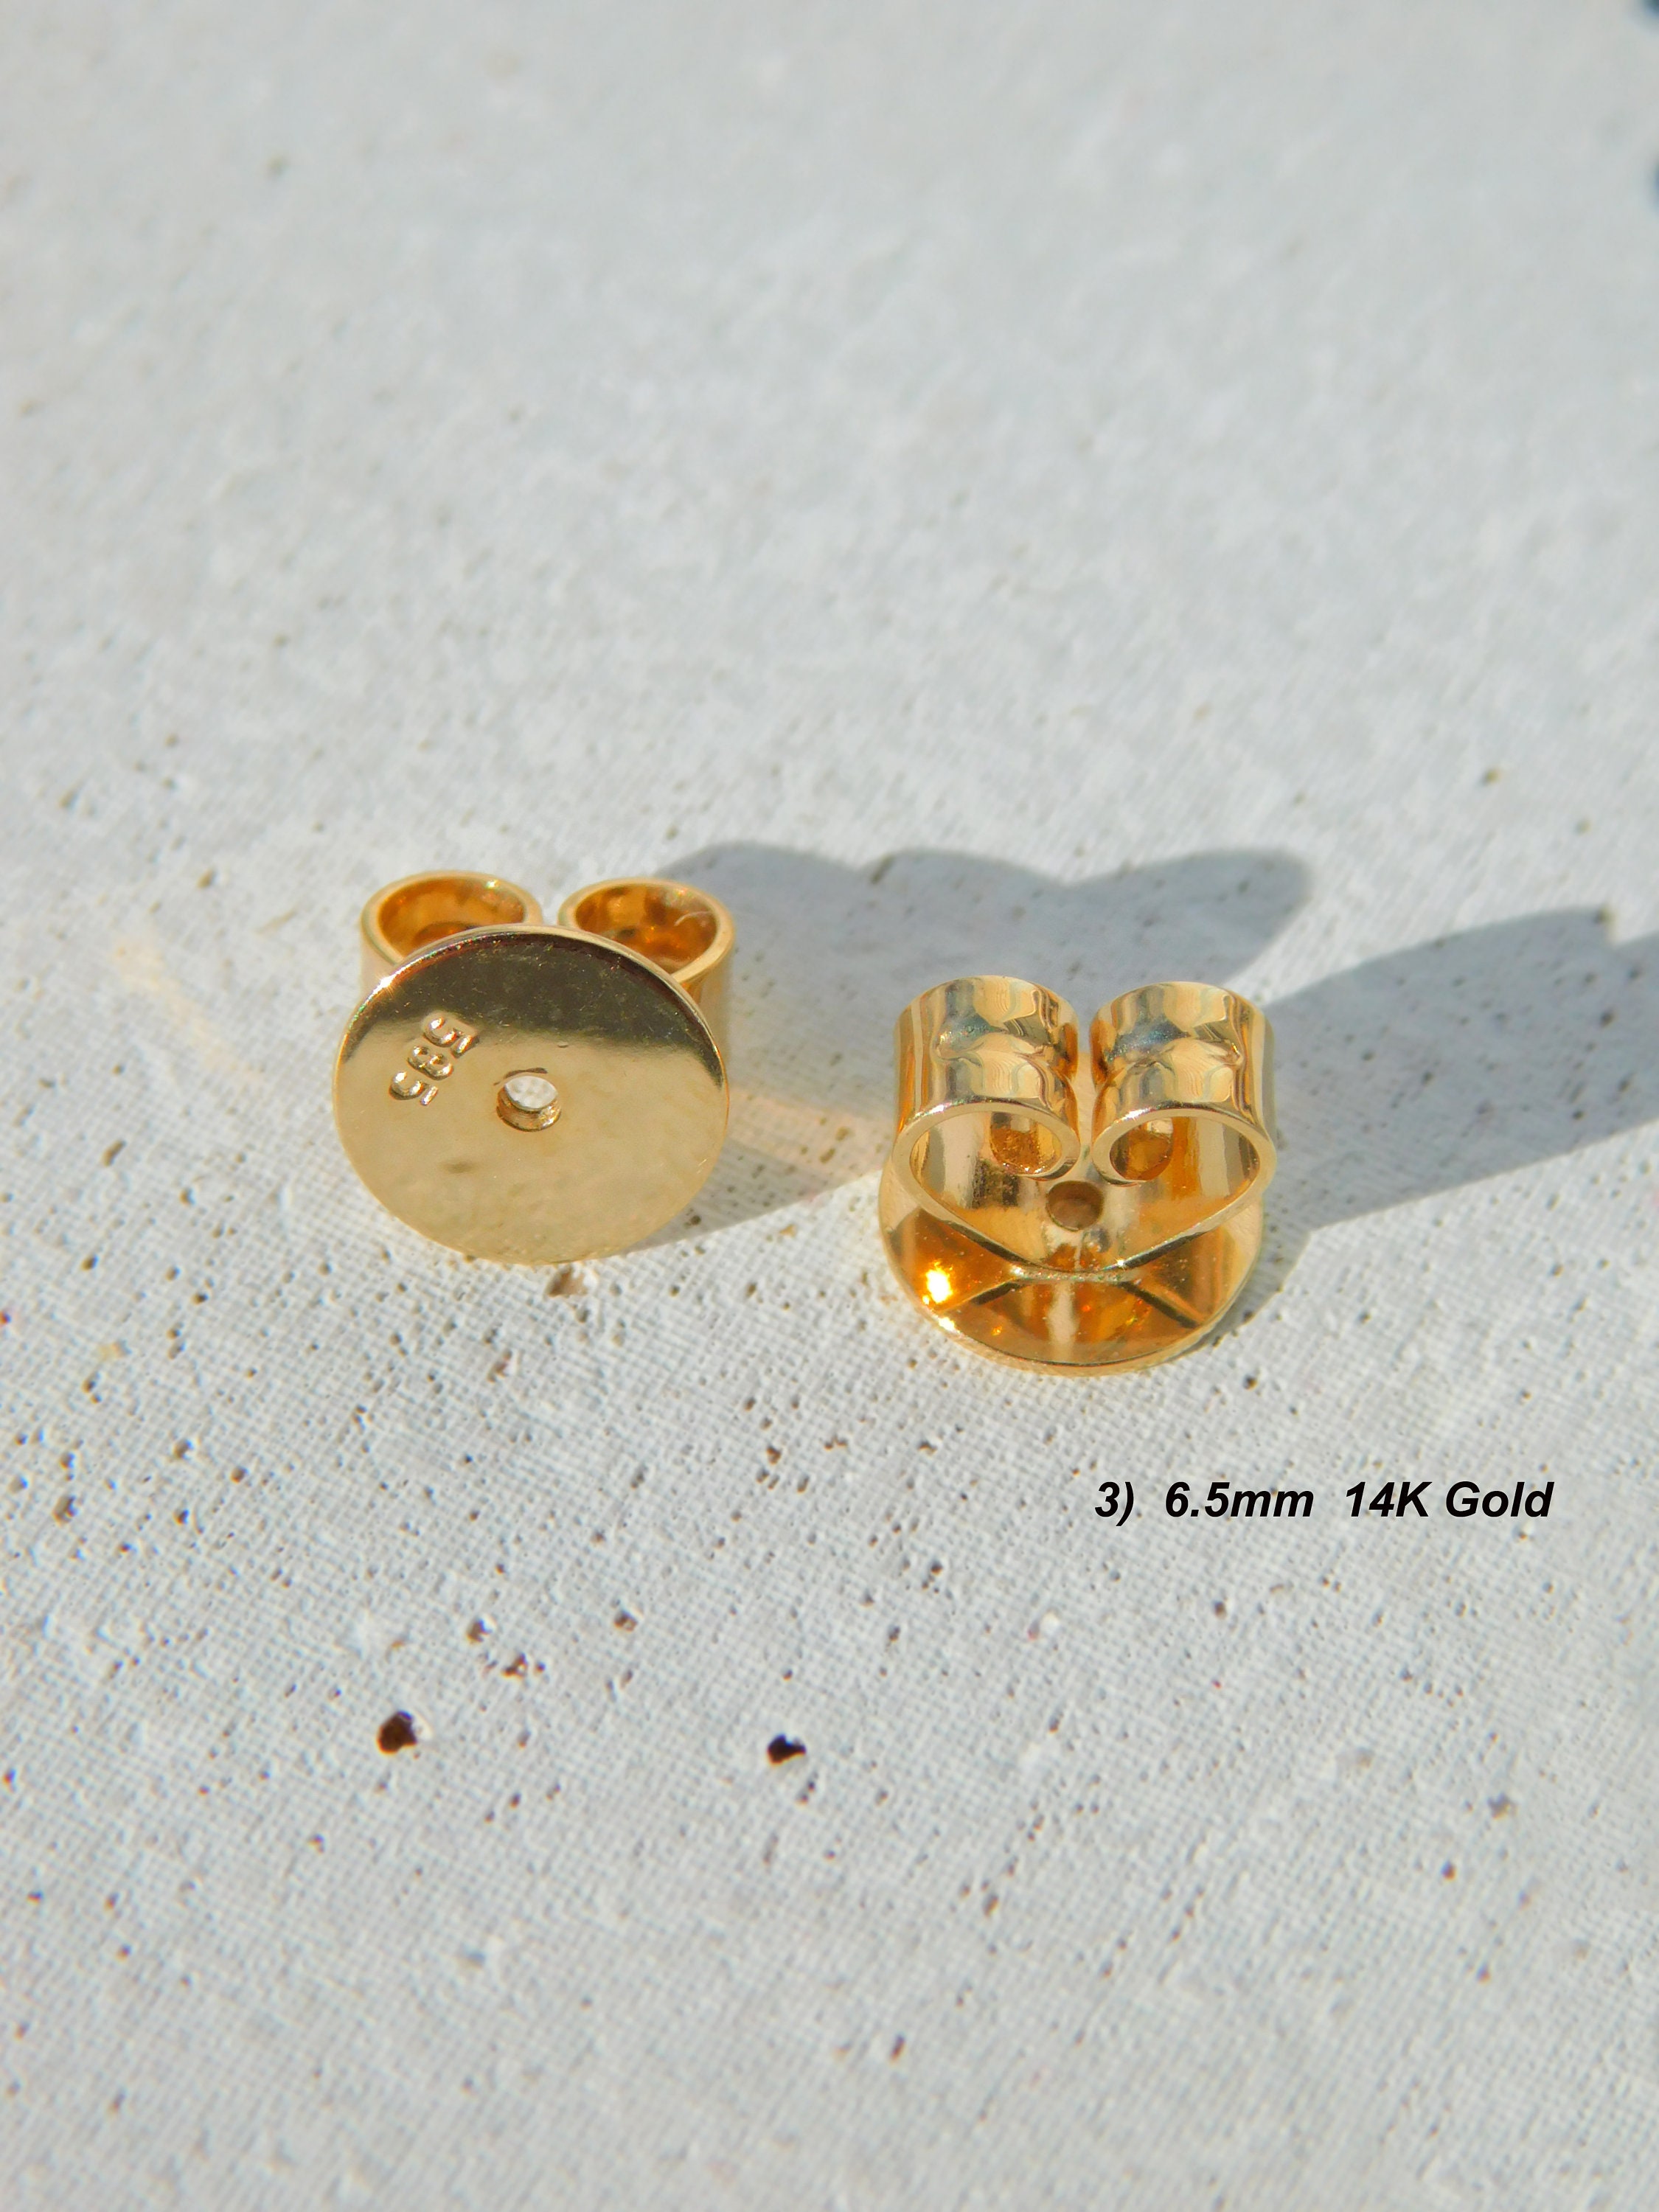 14K Yellow Gold (1 Gram) 8mm Earring Stabilizer Backs for Heavy Earrings by SuperJeweler